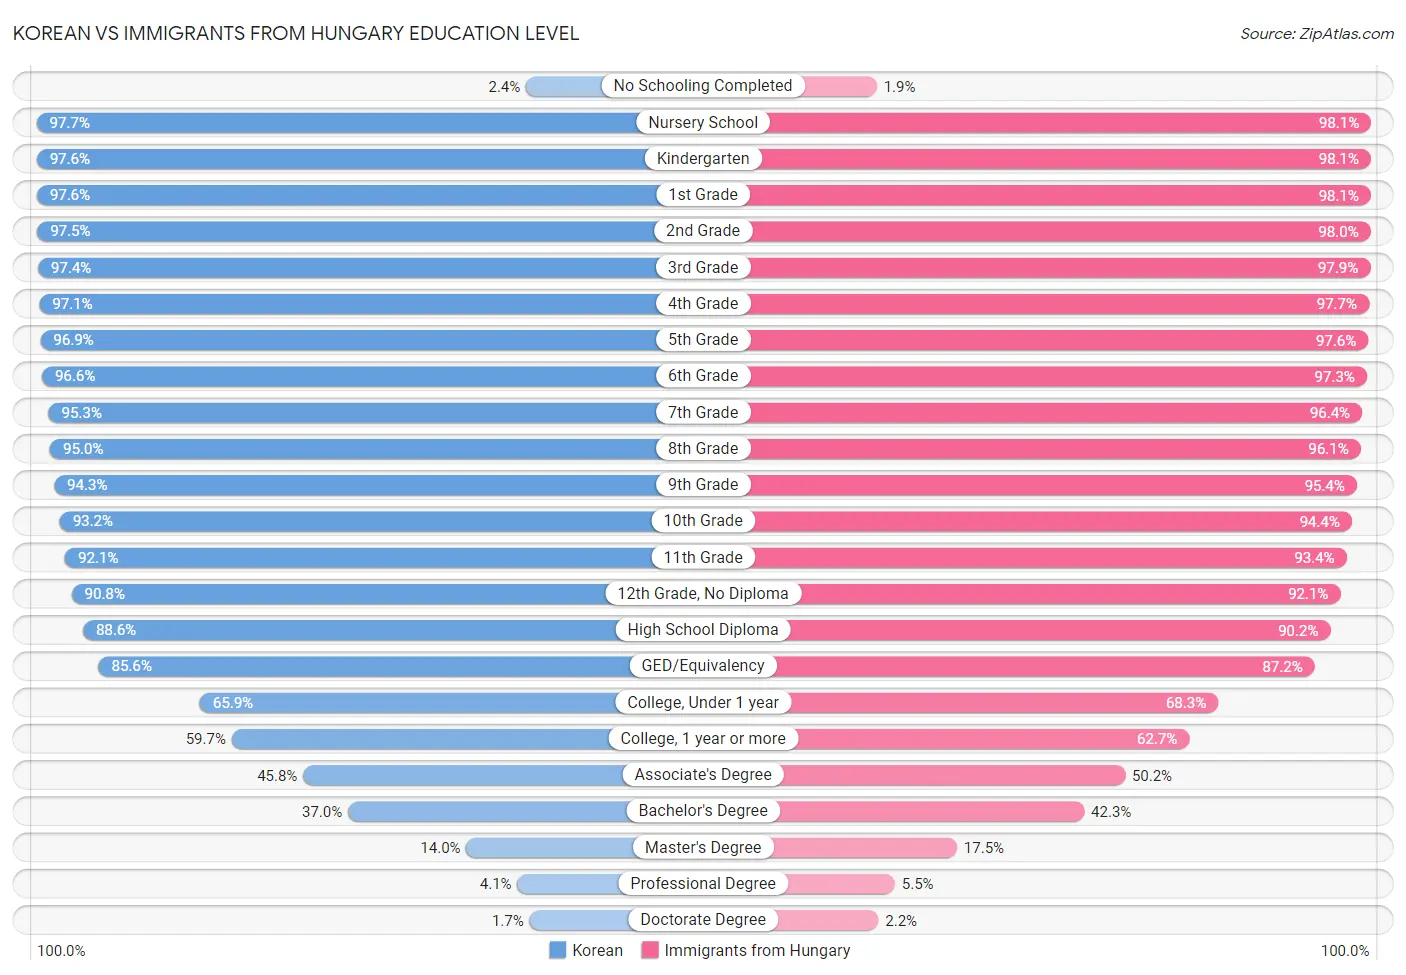 Korean vs Immigrants from Hungary Education Level